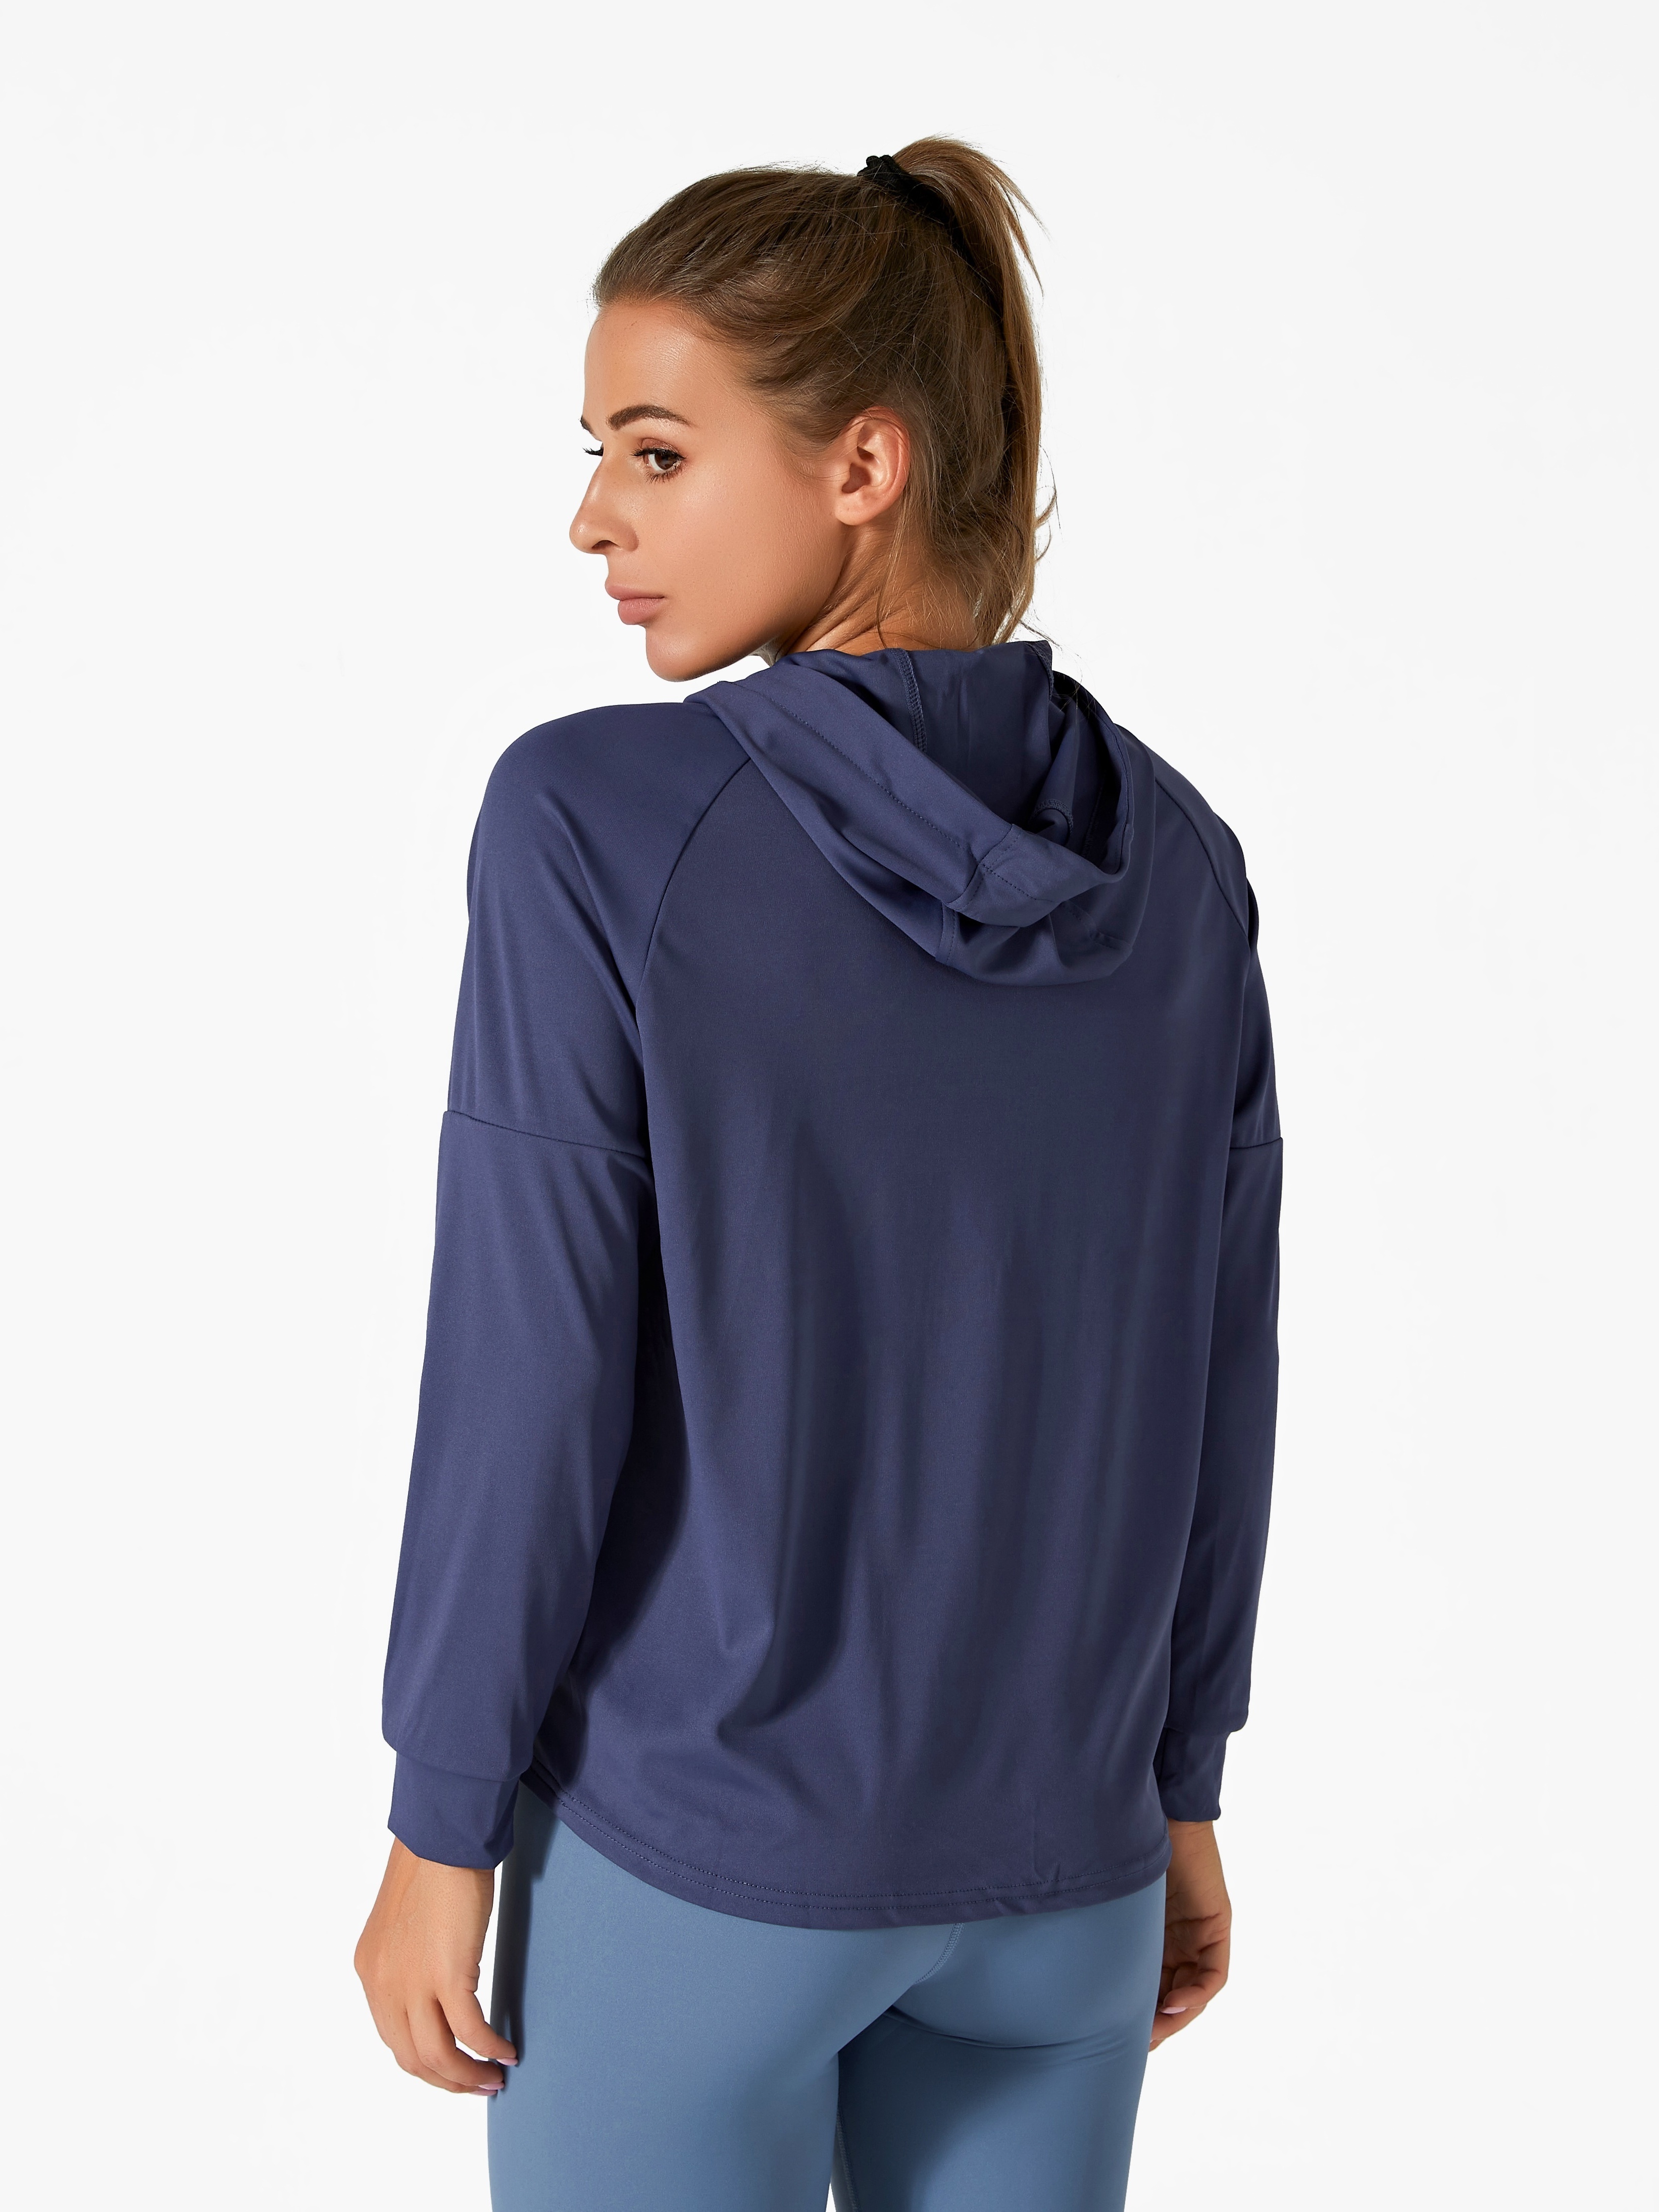 Yelete Women's Activewear Zip Up Workout Jacket w Hoodie, Charcoal